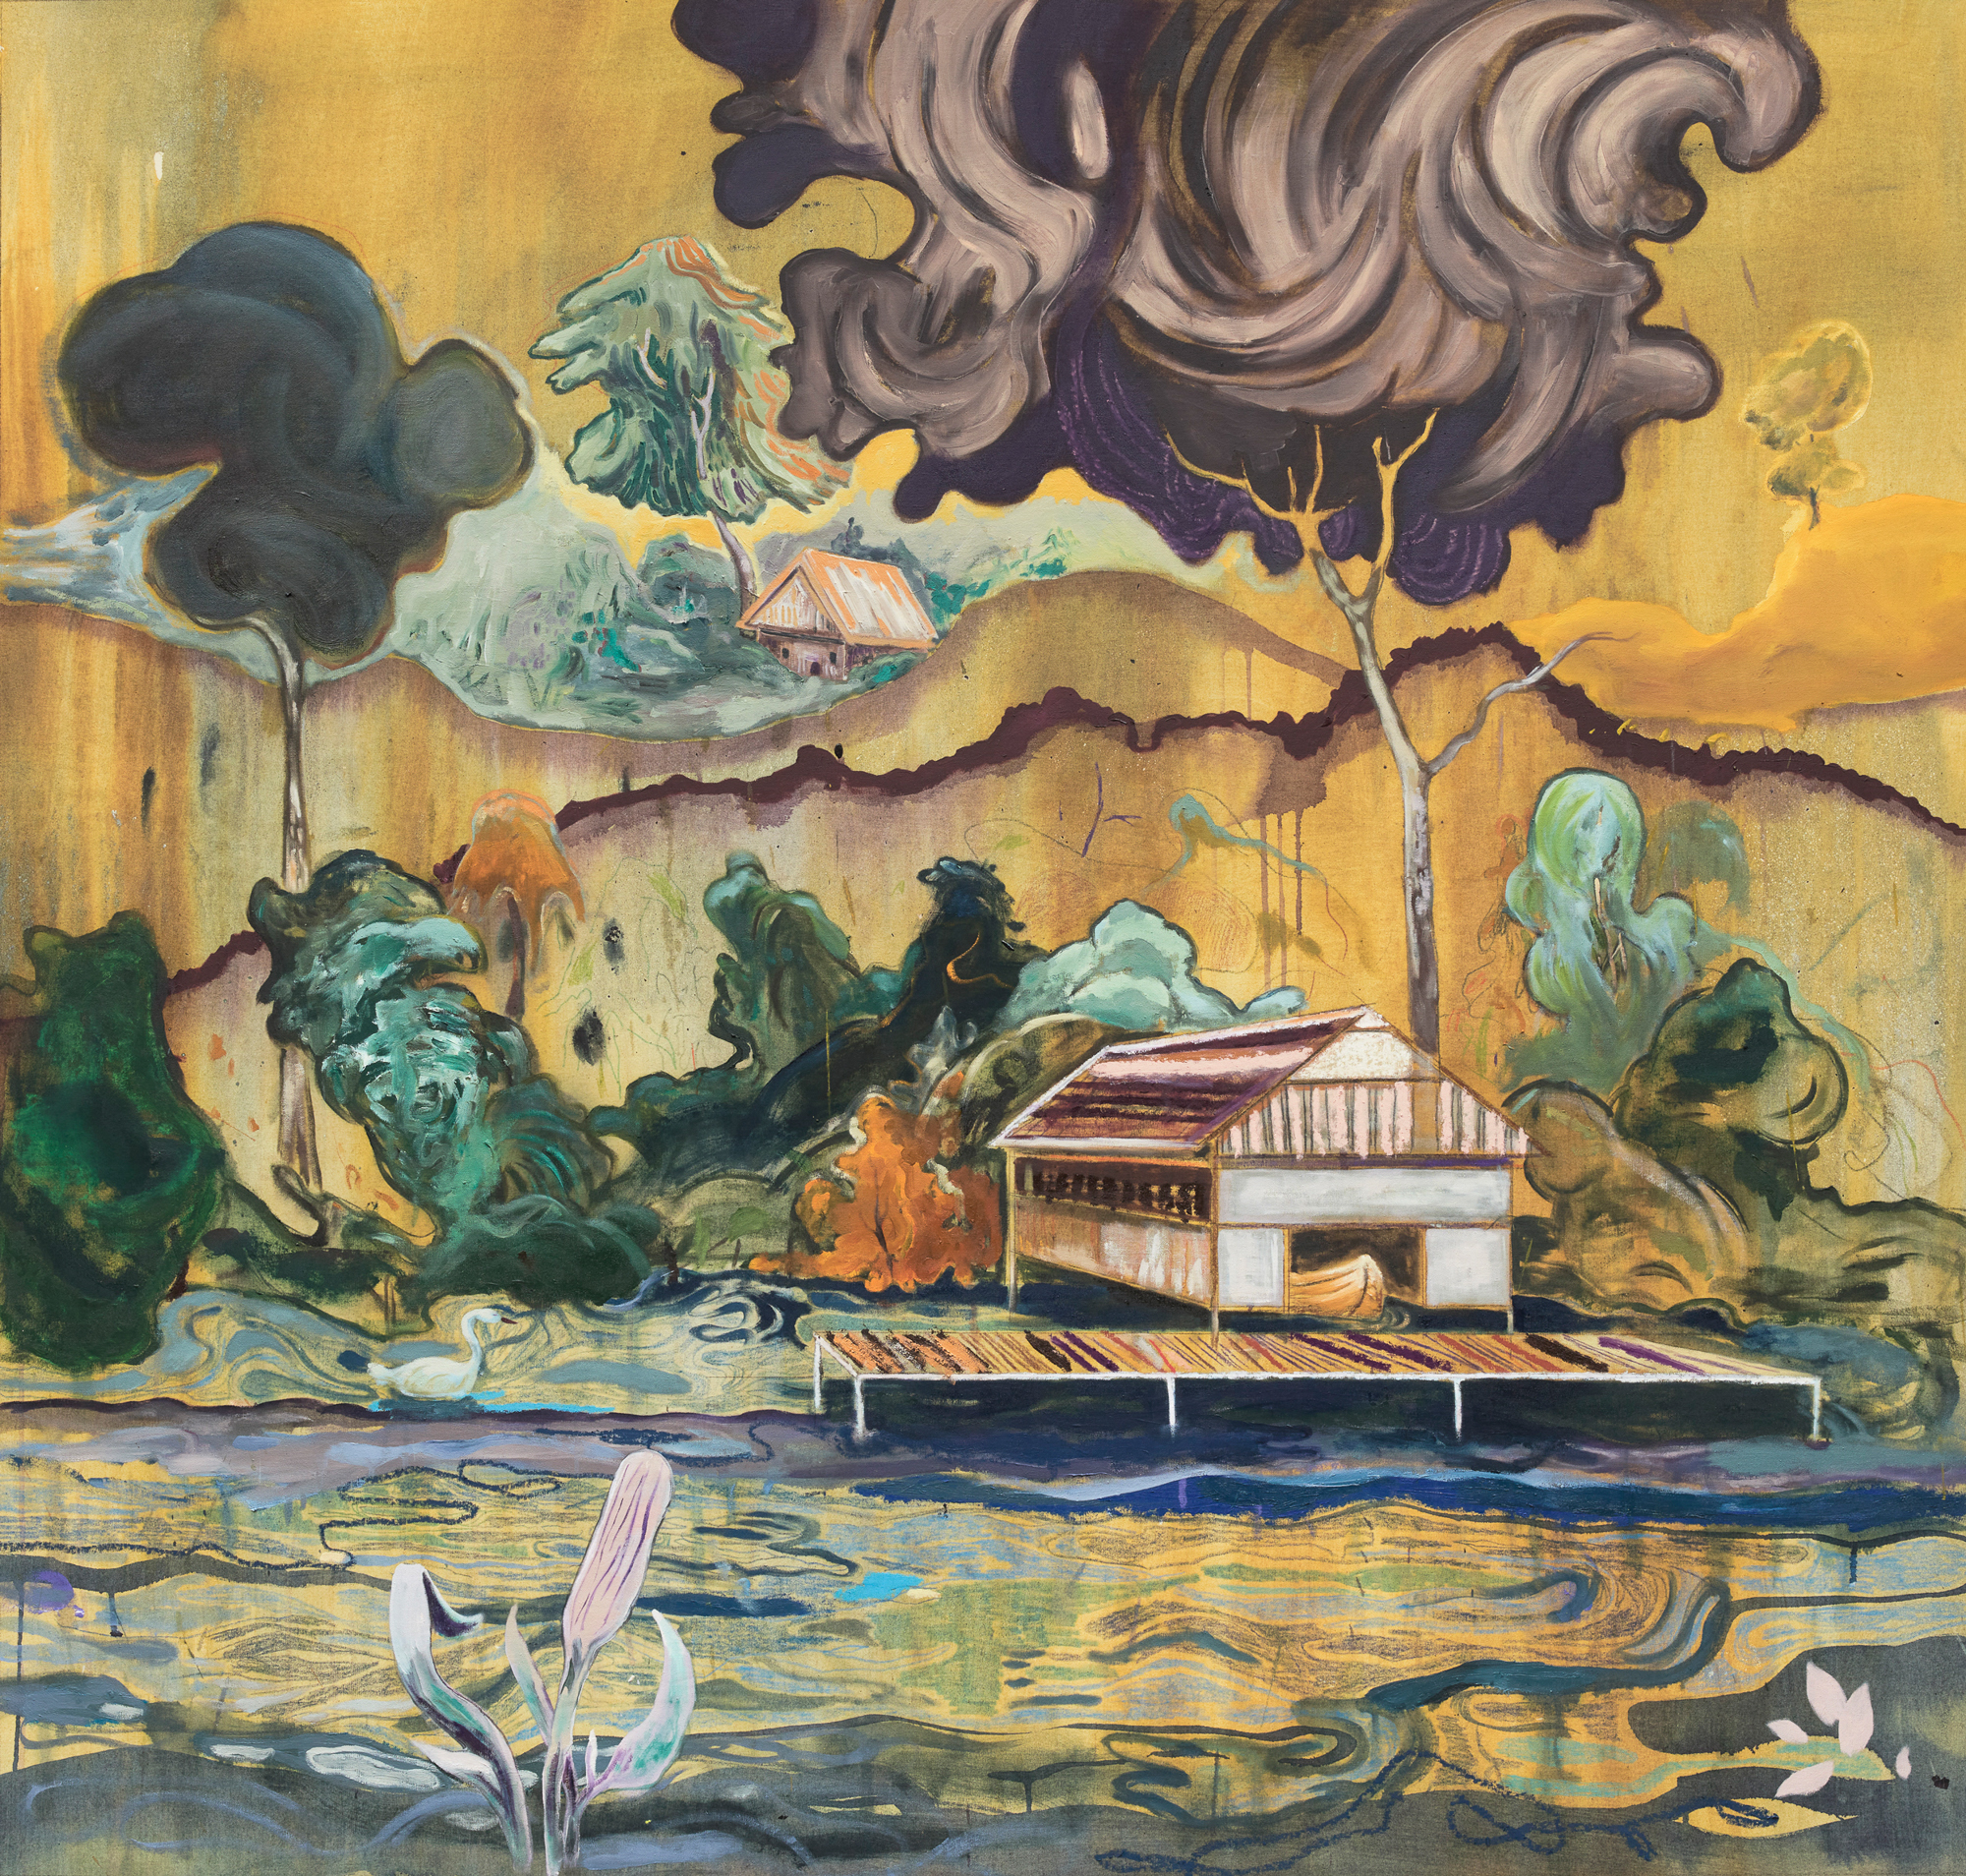 Boathouse, 2020, mixed media on canvas, 150 x 160 cm